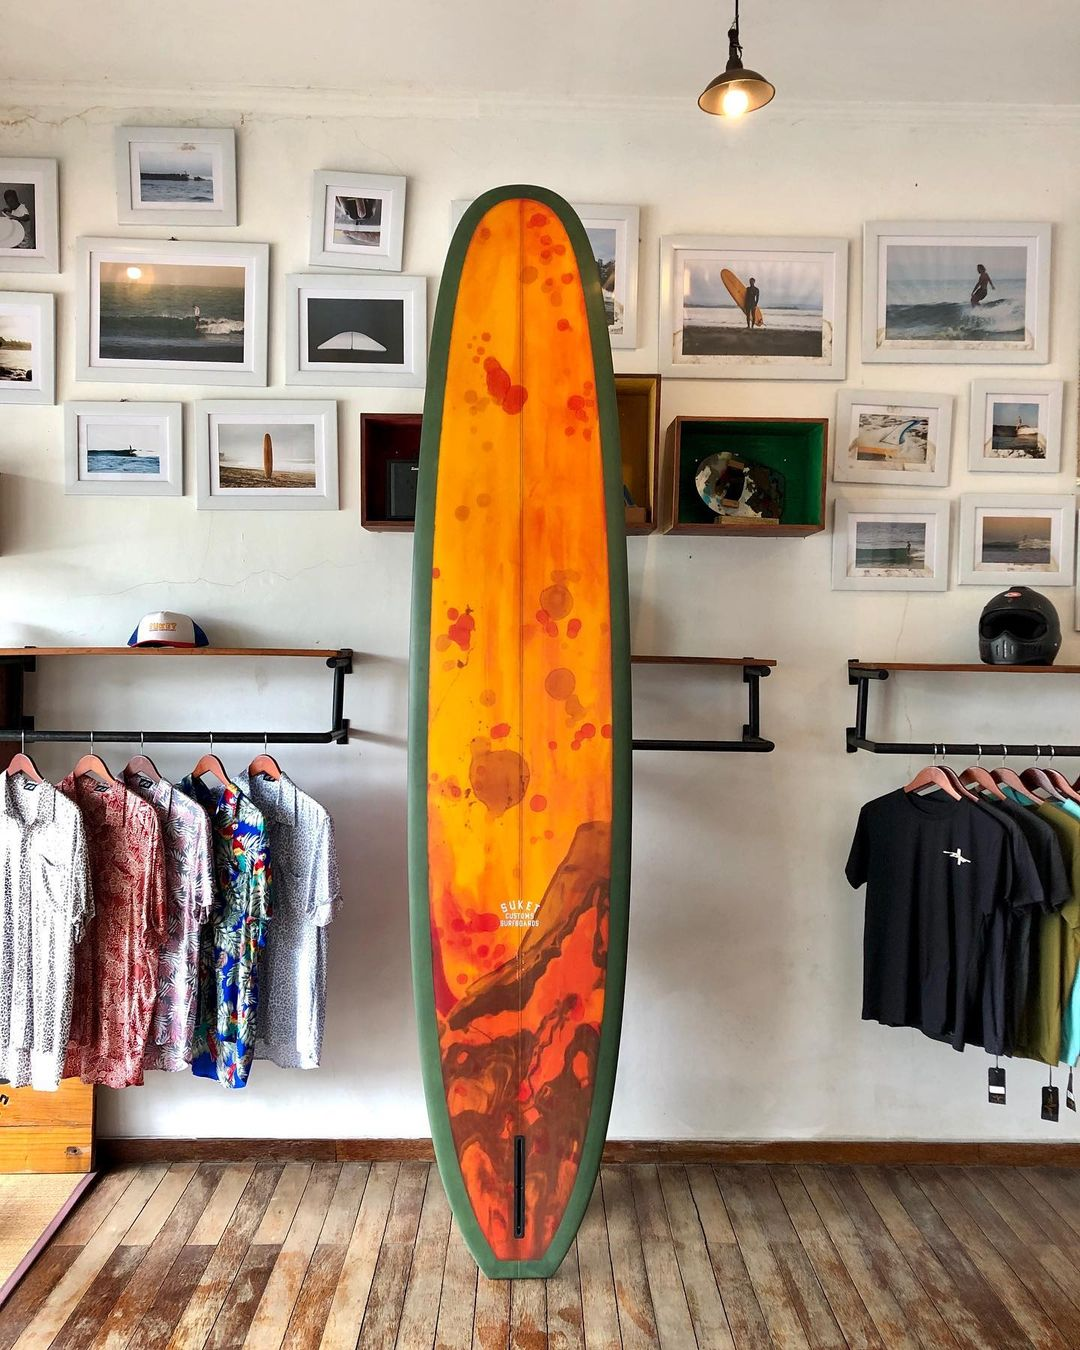 Suket surf shop in Bali displaying the longboard